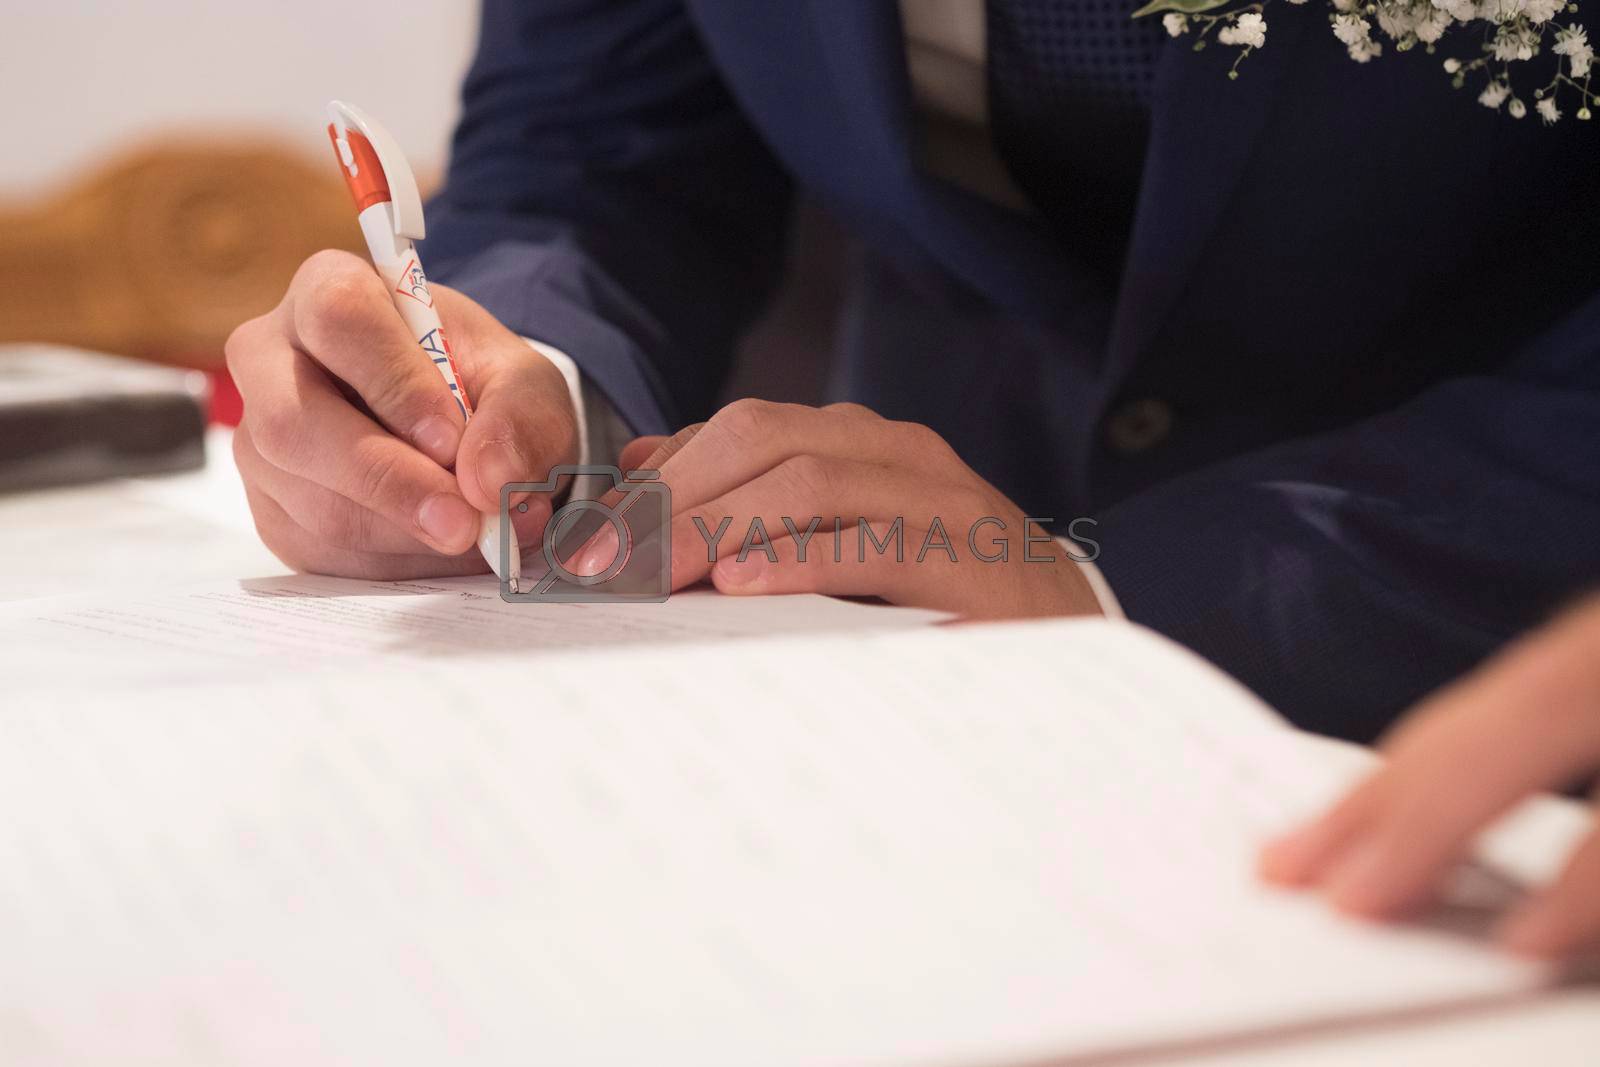 Royalty free image of wedding best man groom signing register in catholic wedding by tinofotografie